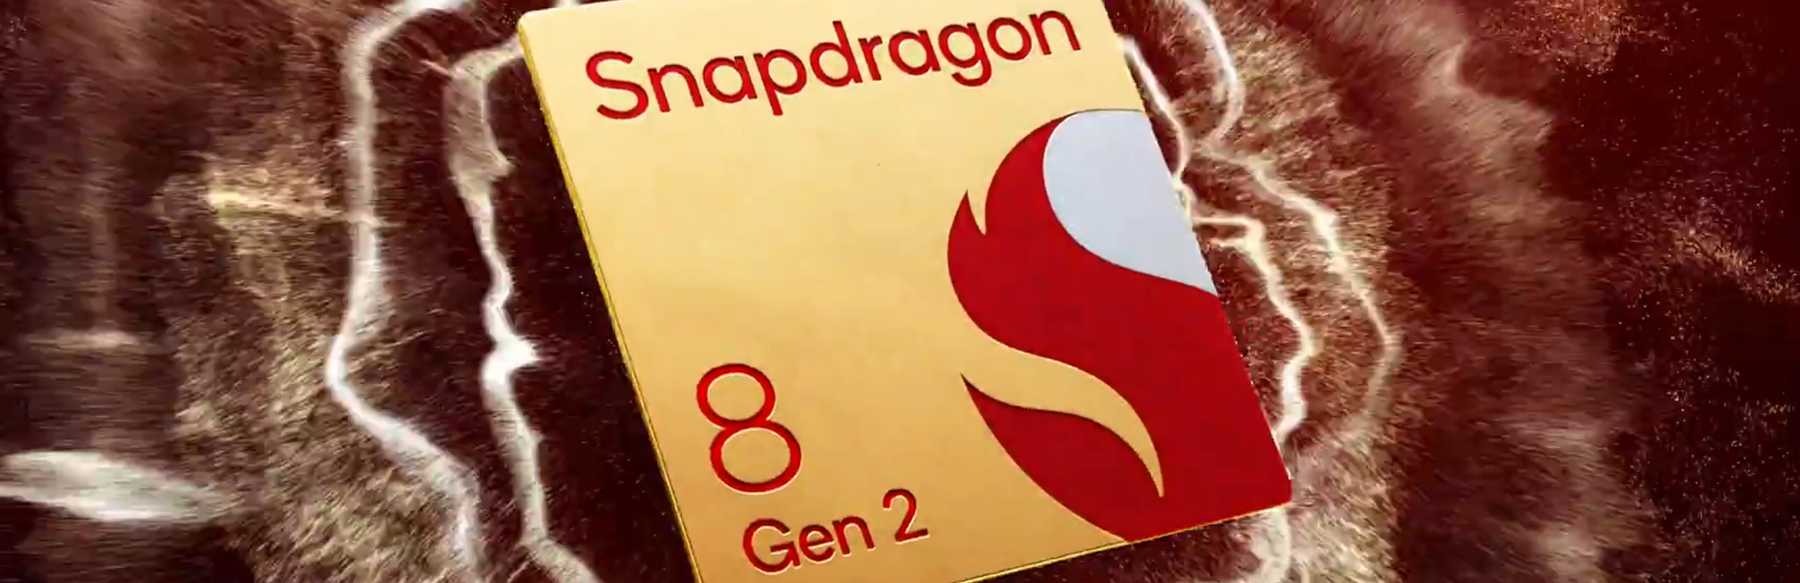 Full details of the new Snapdragon 8 Gen 2 chipset!